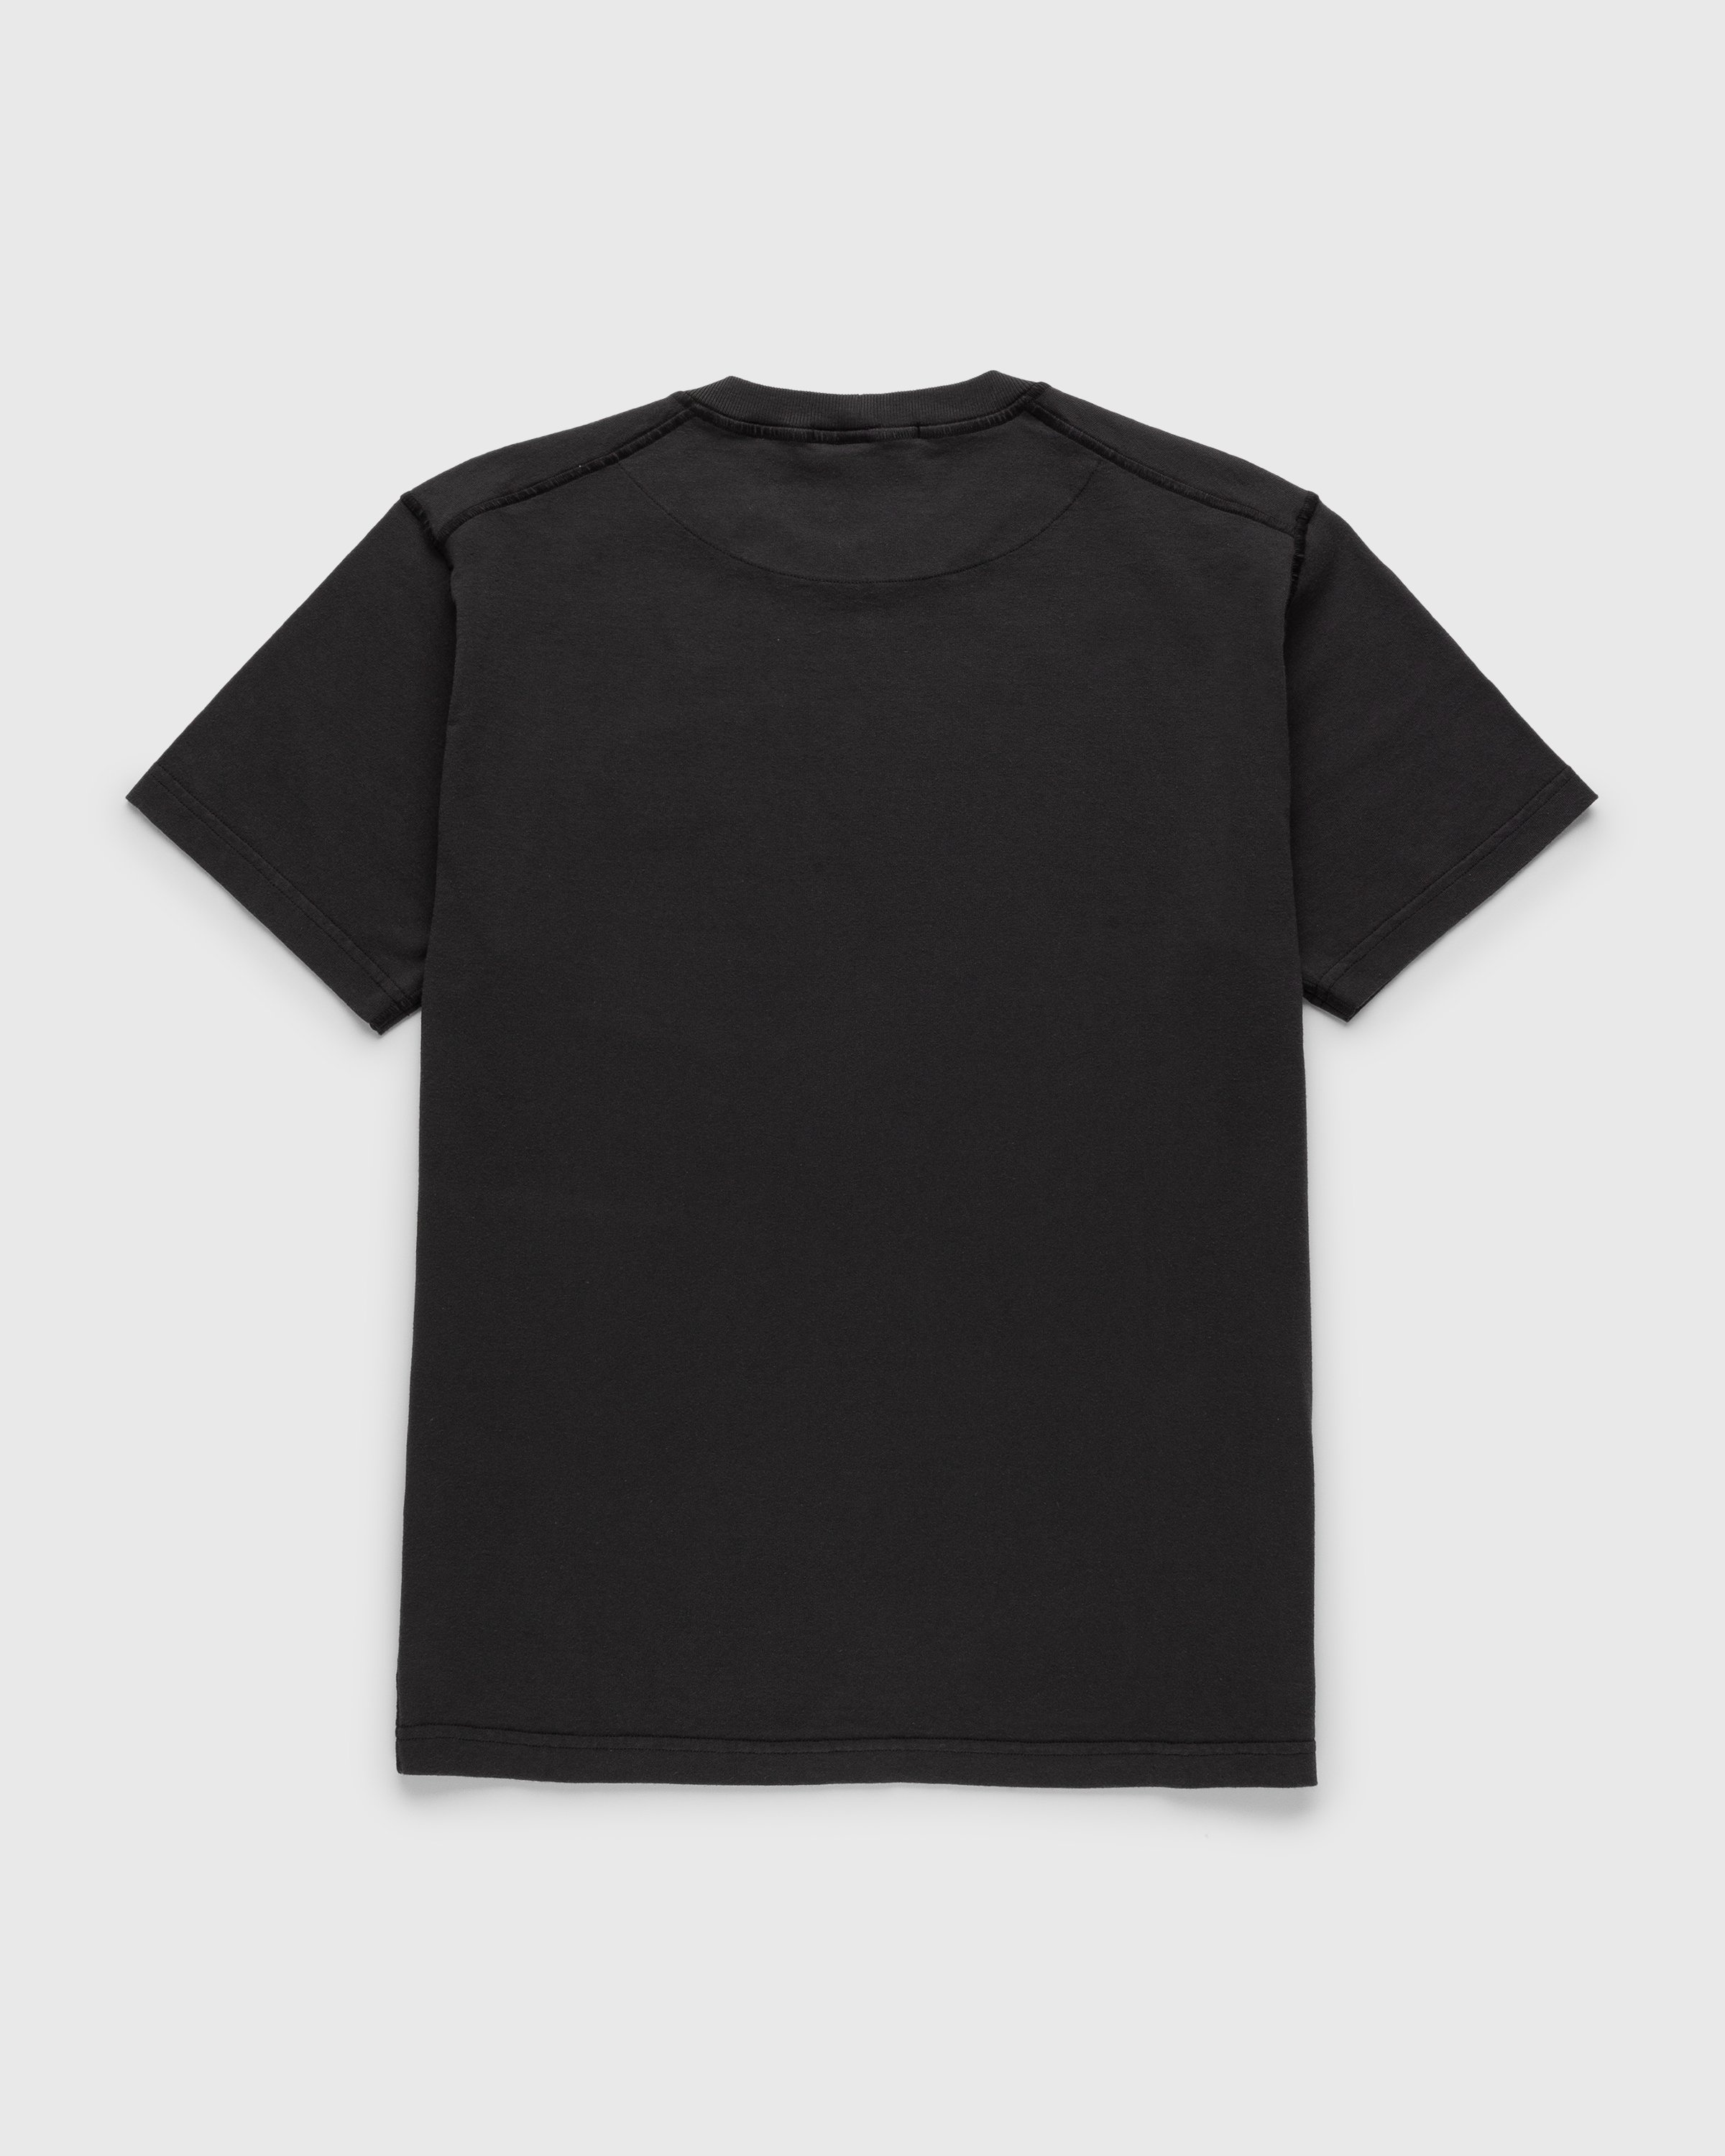 Stone Island – Fissato T-Shirt Charcoal - Tops - Beige - Image 2